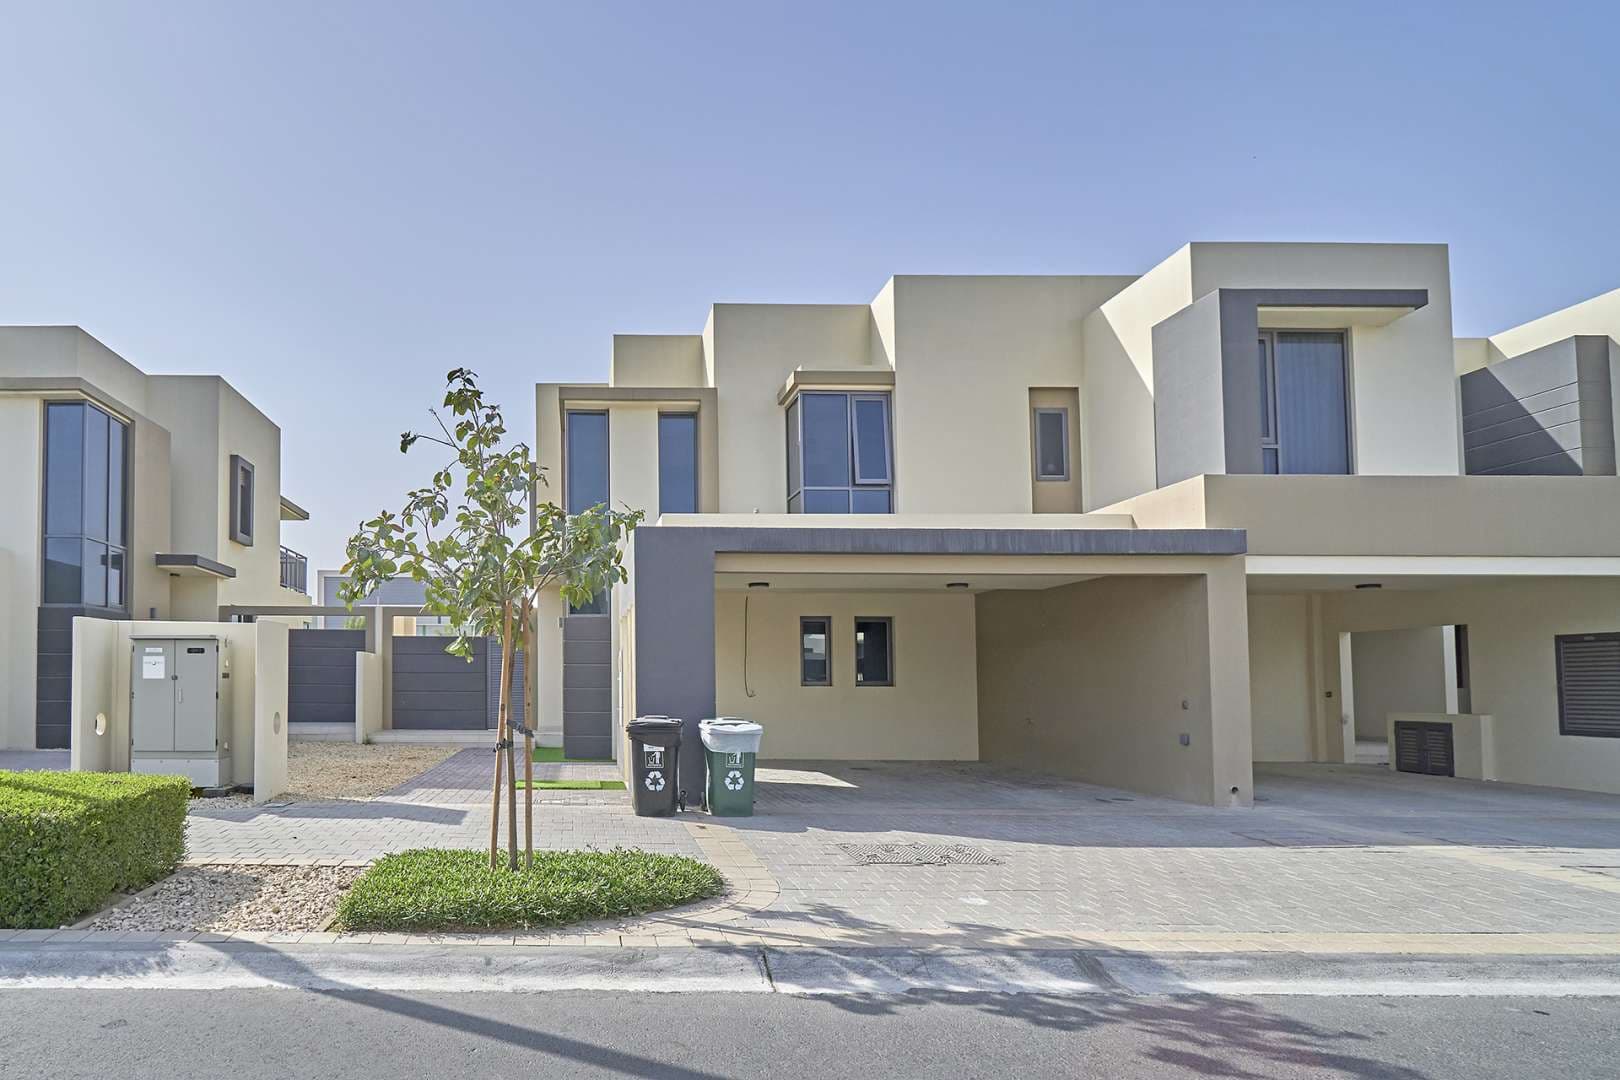 4 Bedroom Townhouse For Sale Maple At Dubai Hills Estate Lp09338 12c3a93c1baf8500.jpg